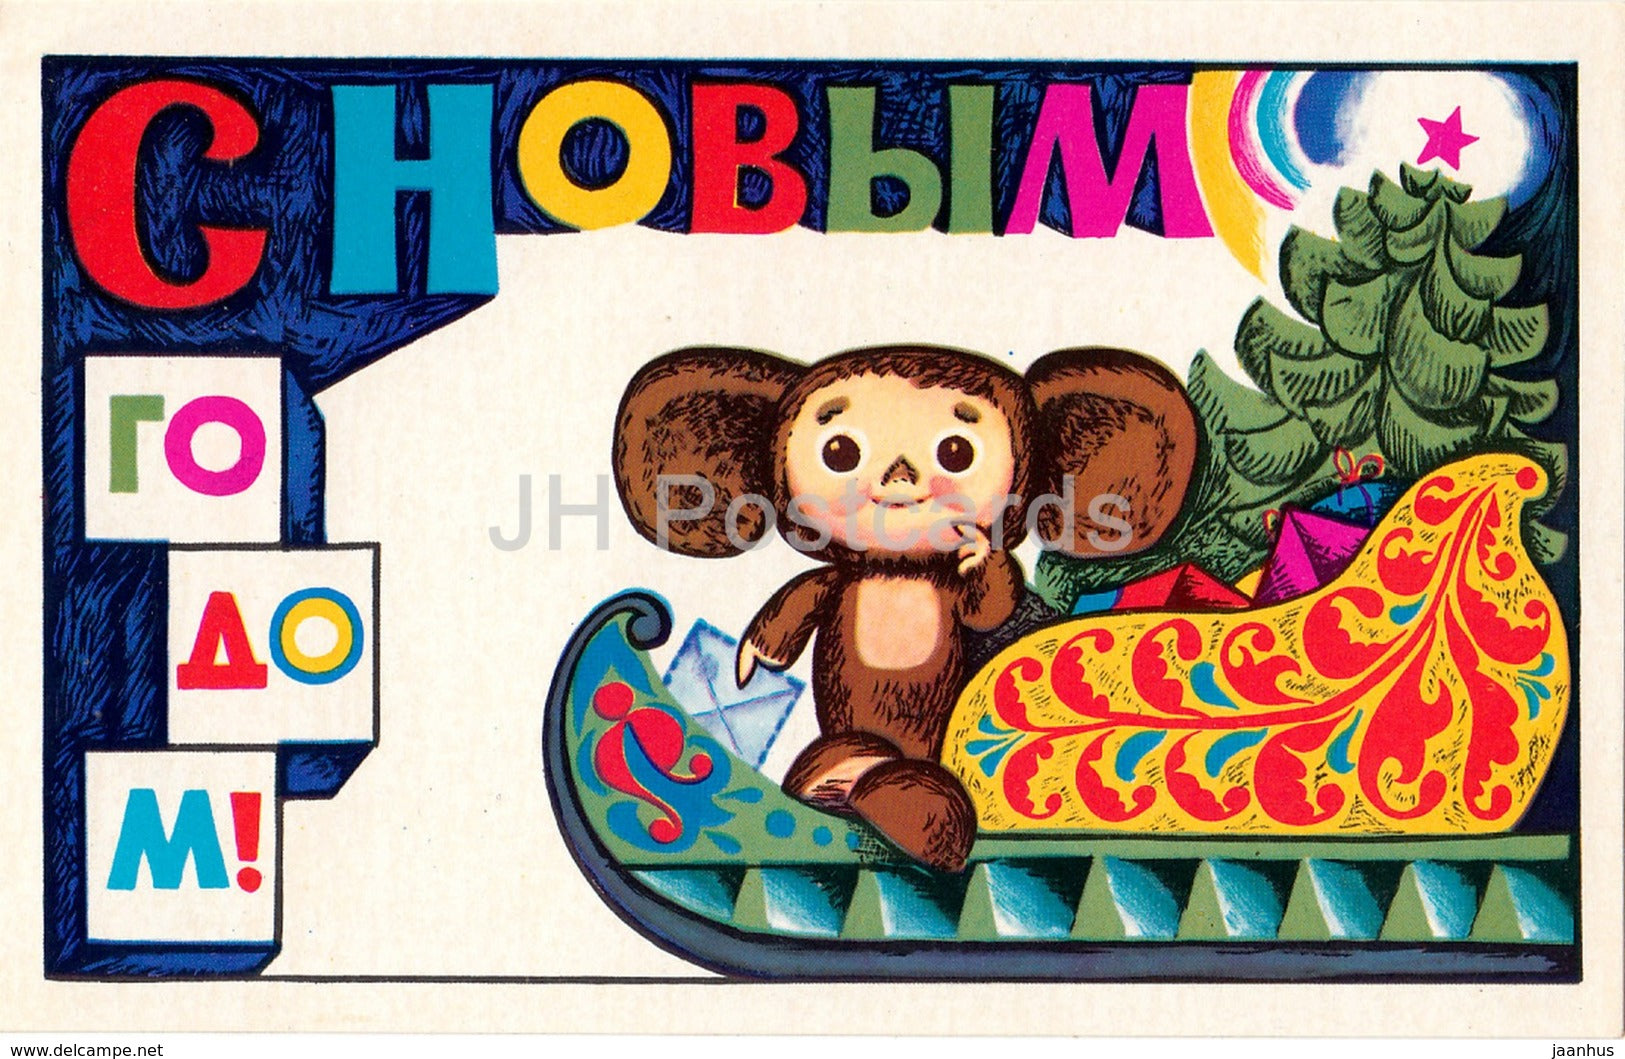 New Year Greeting Card by A. Ganin A. Zvyagin - Cheburashka - 1974 - Russia USSR - used - JH Postcards